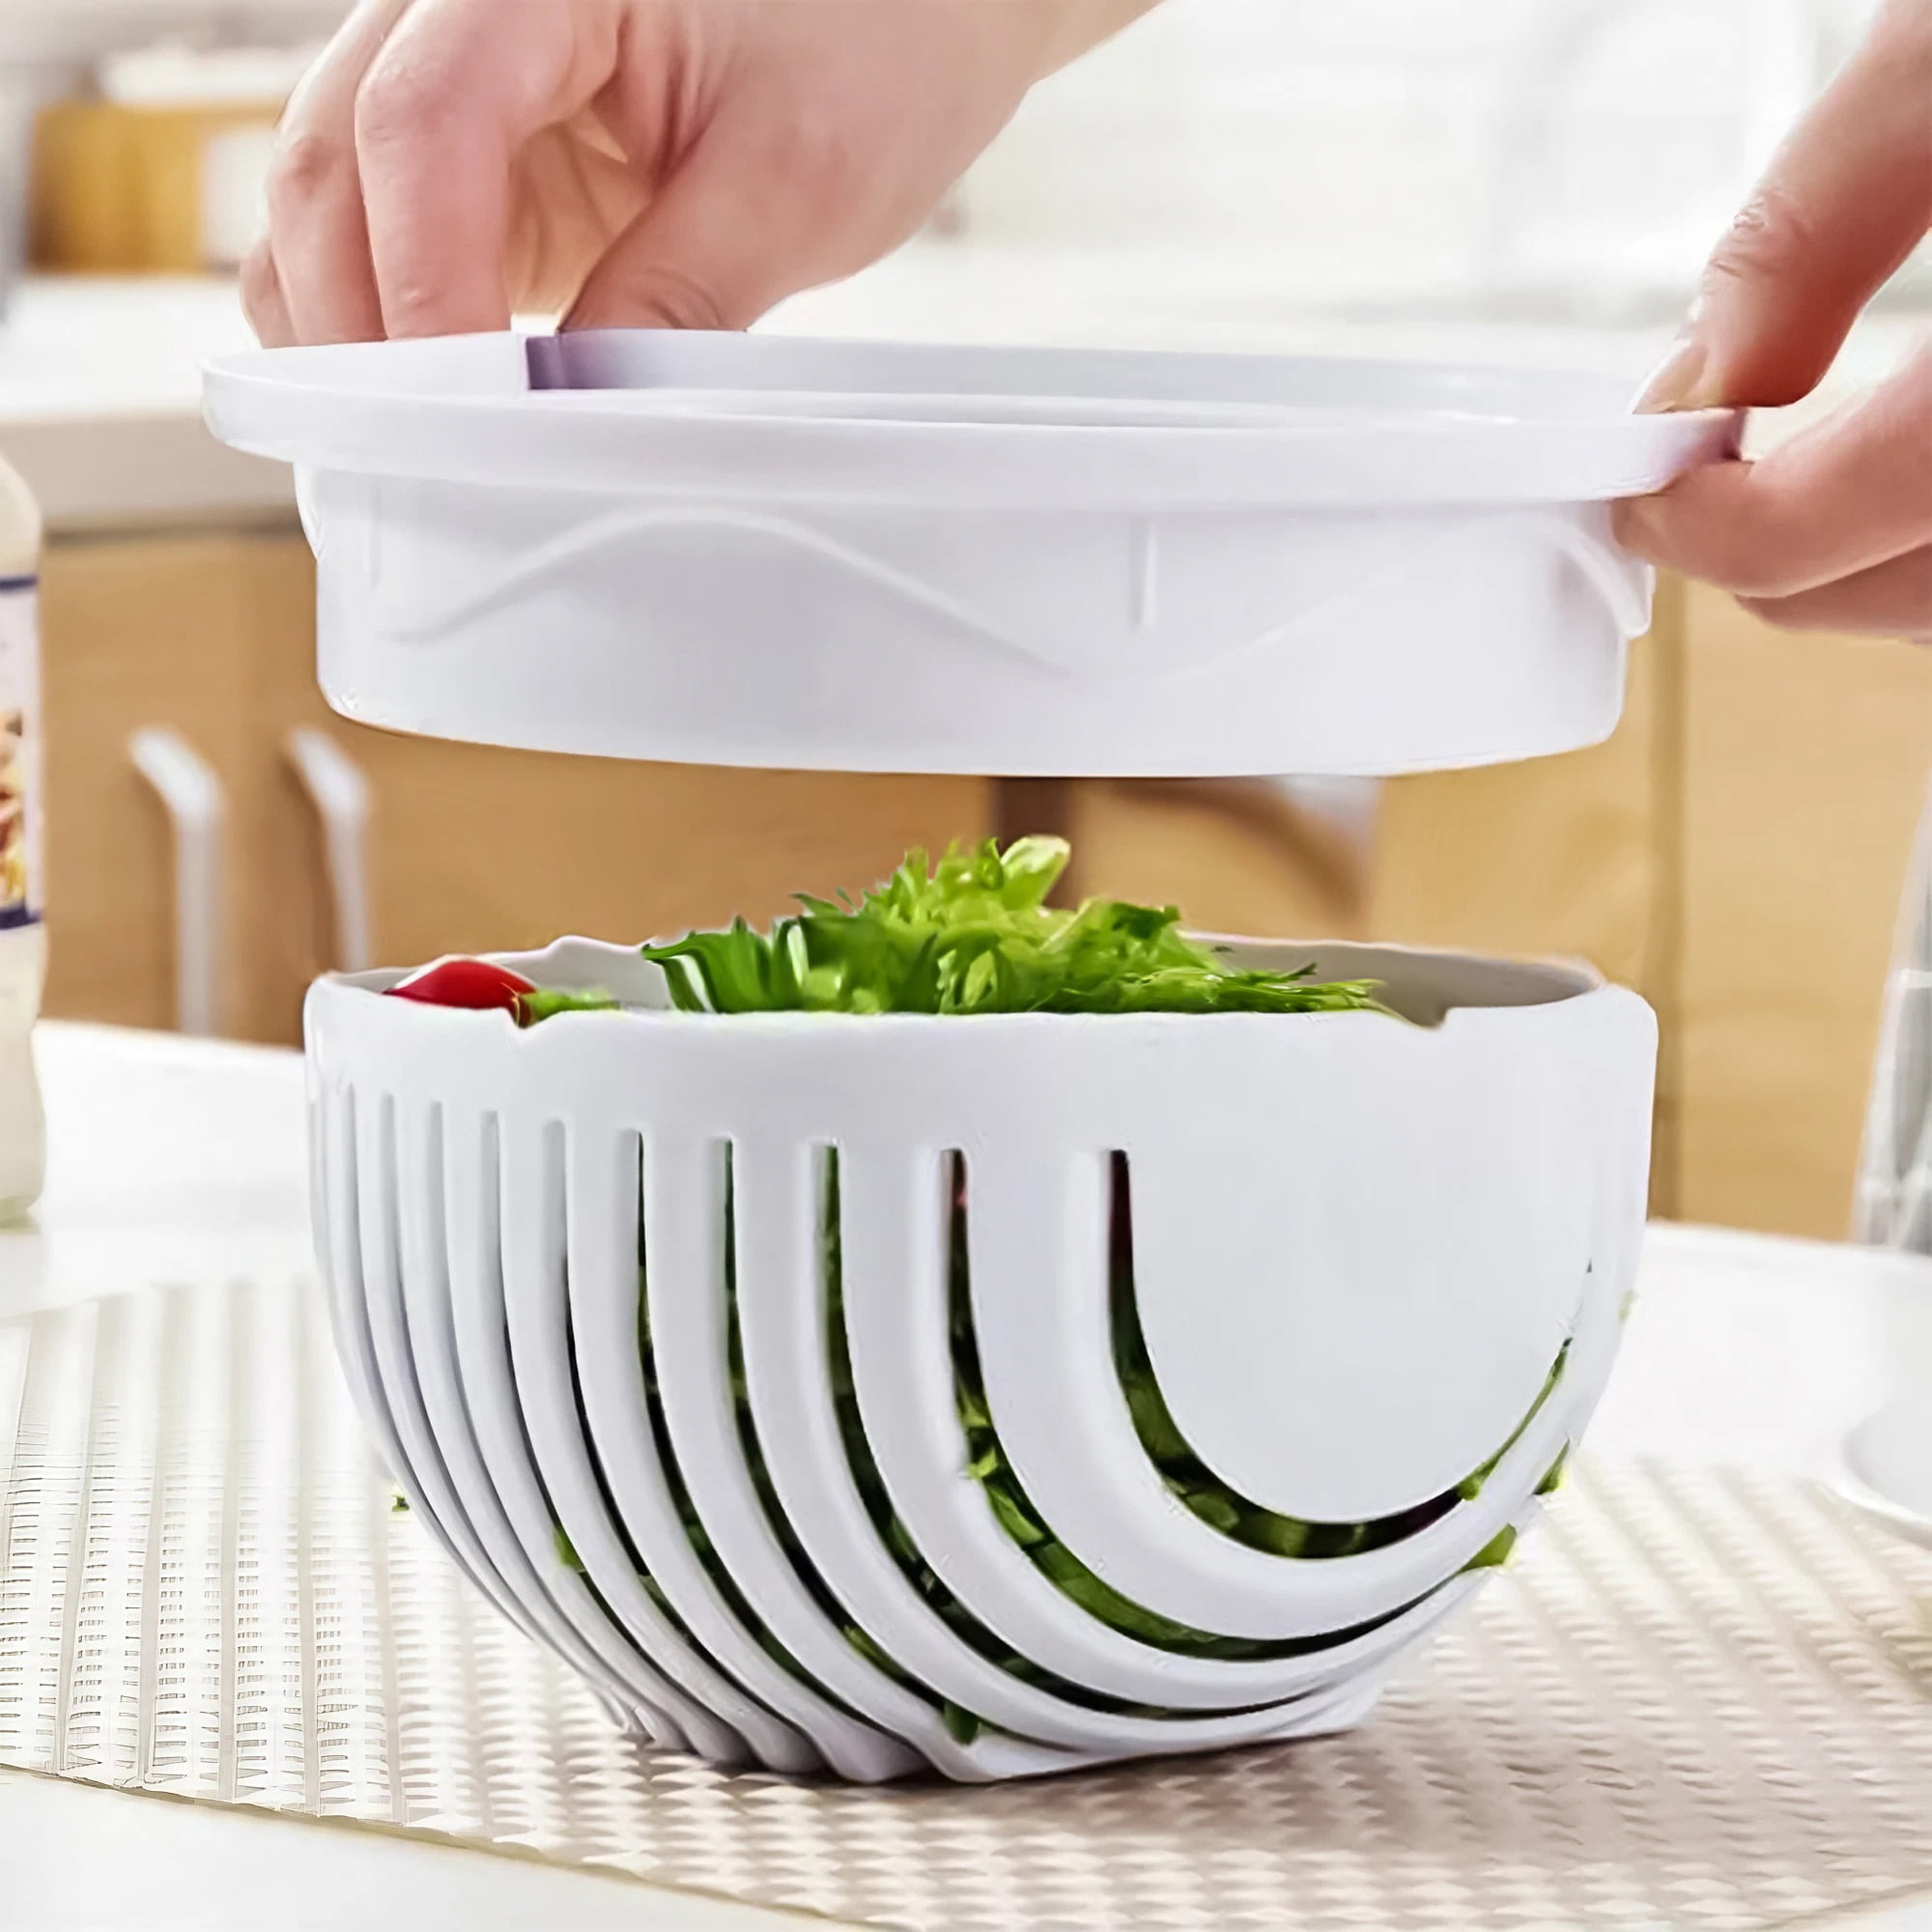 Salad Cutter Bowl Vegetable Chopper